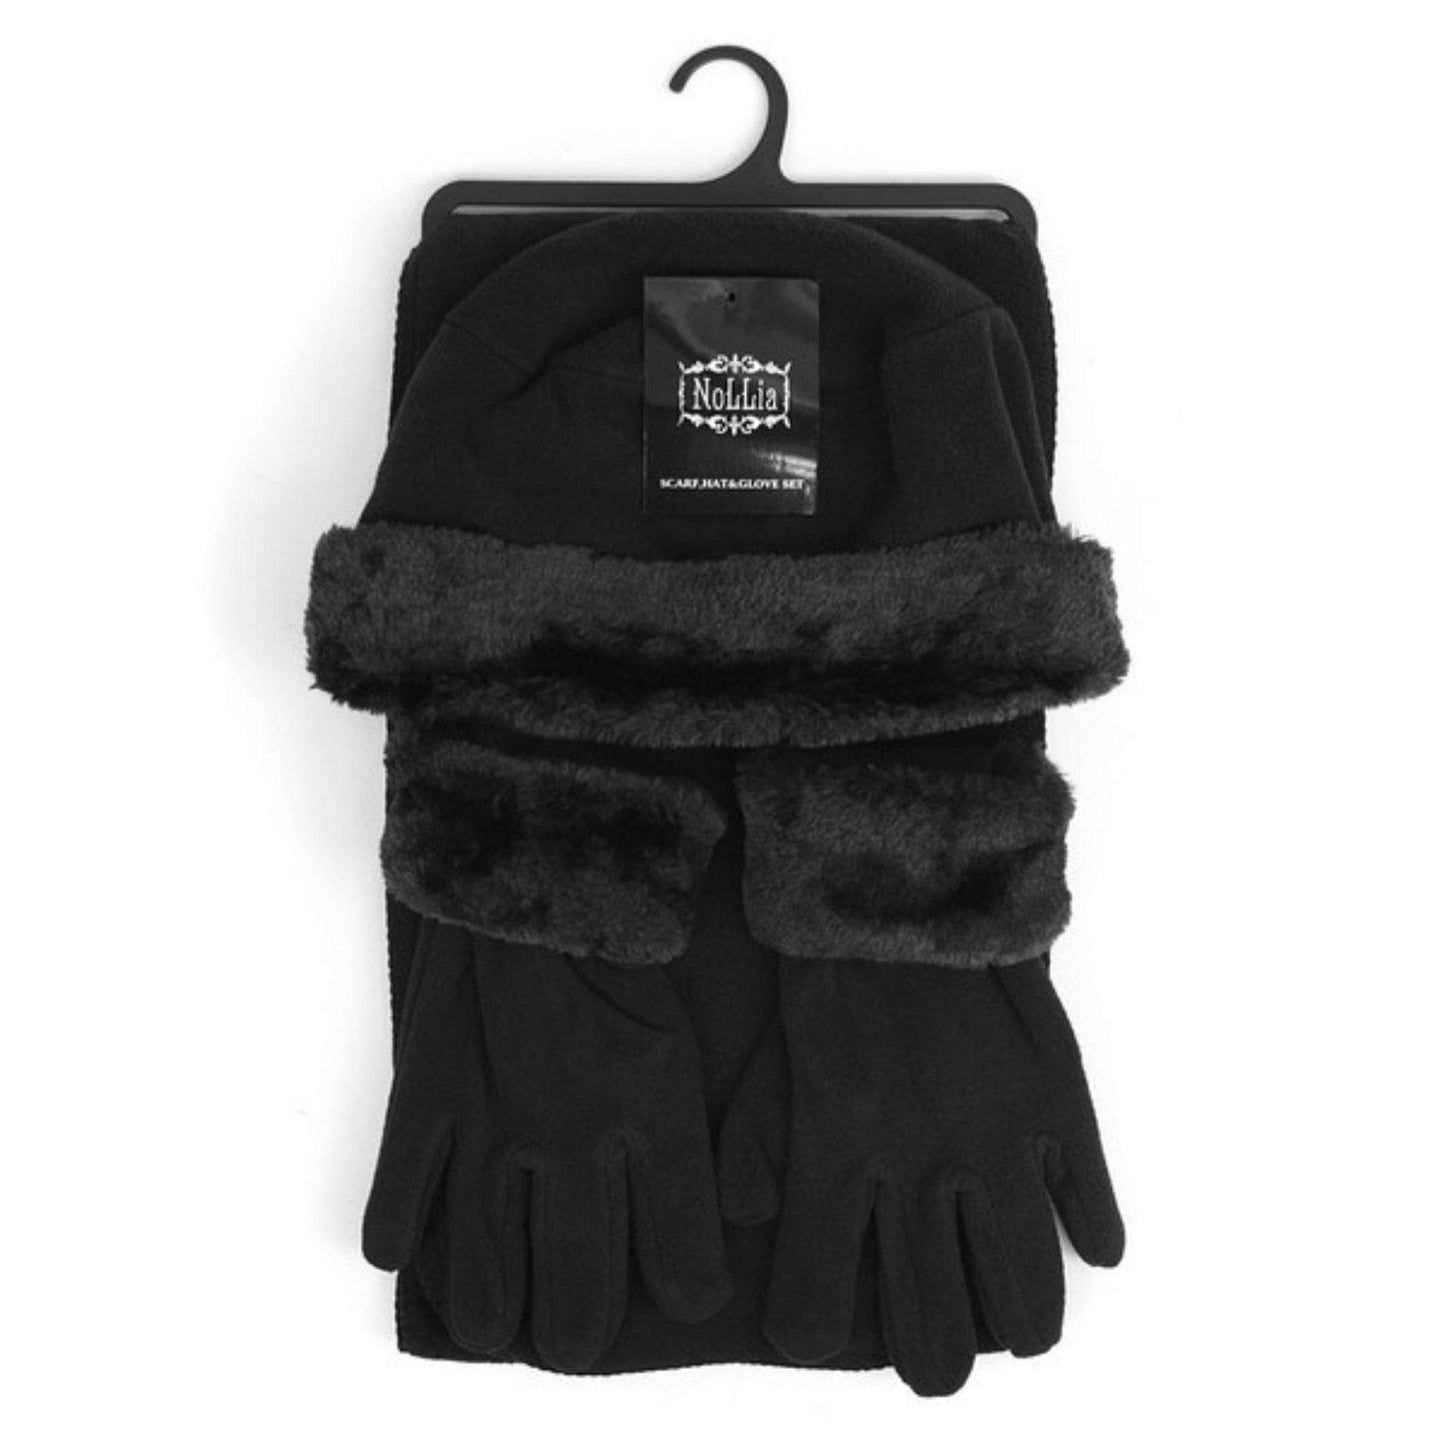 Black hat, scarf, and glove set